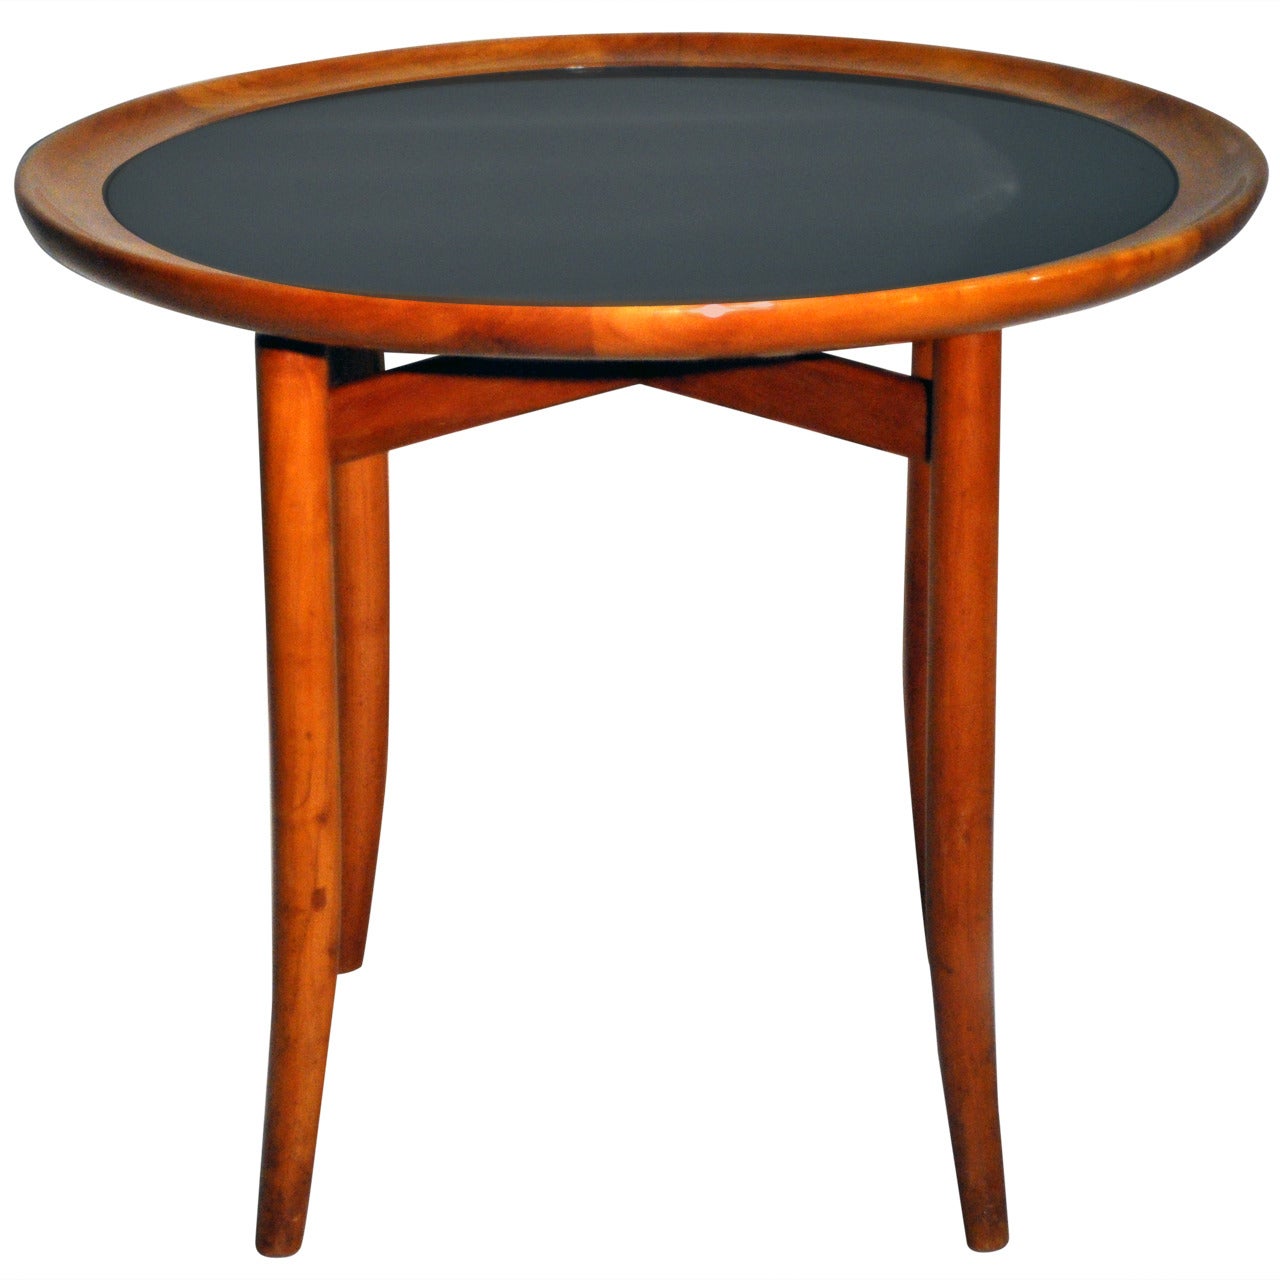 Art Deco Round Tea Table with Black Glass